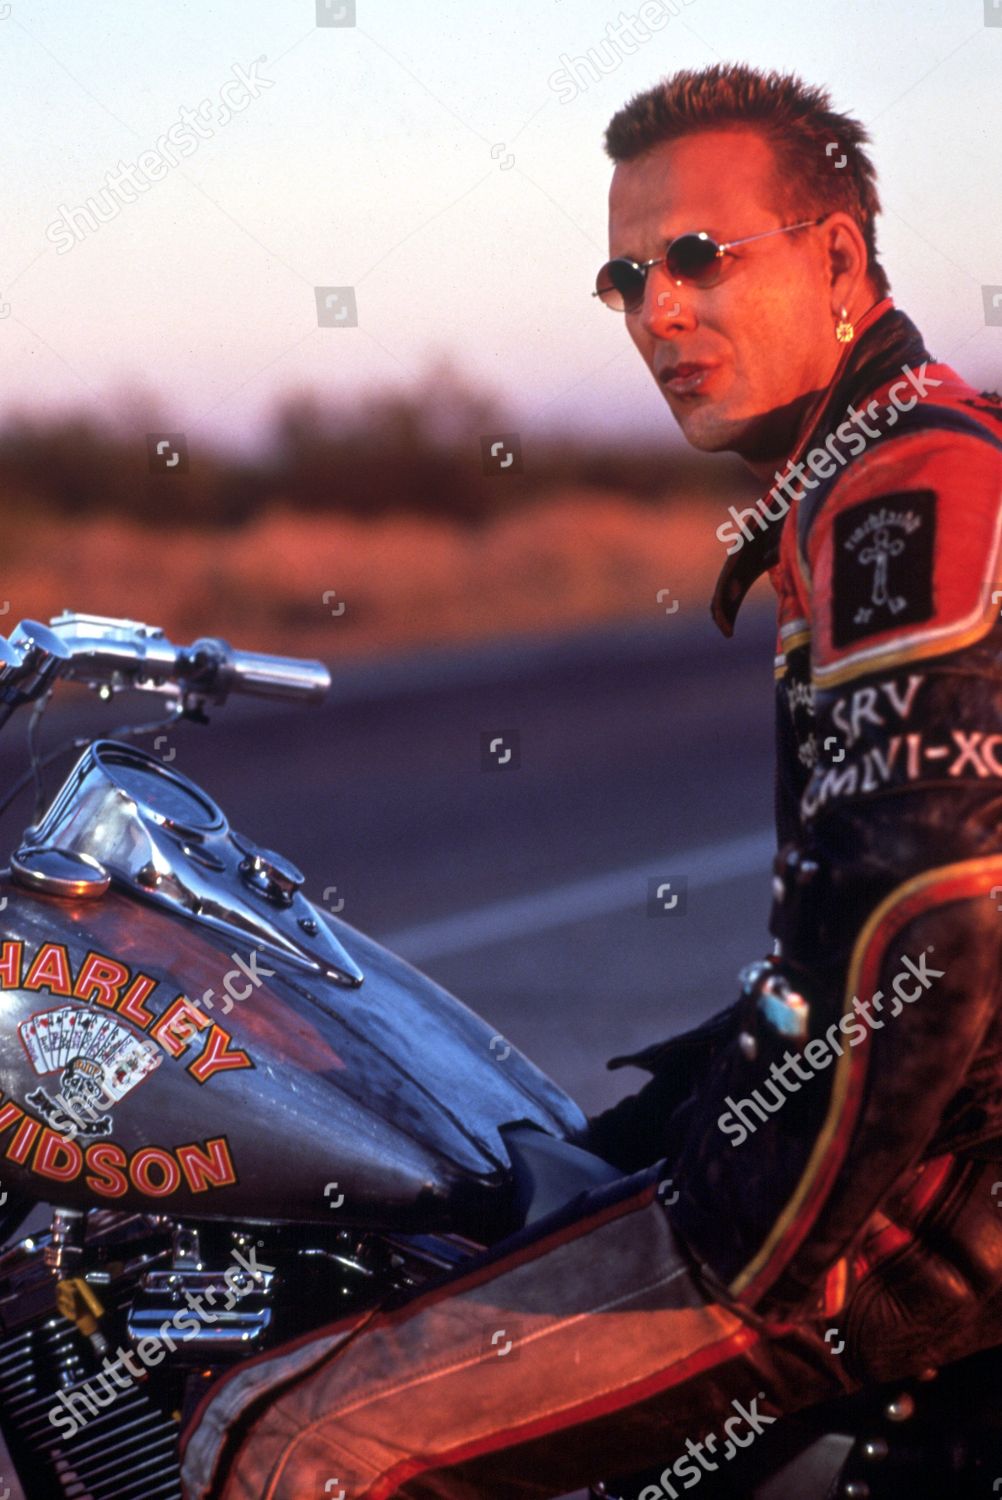 Film Stills Harley Davidson Marlboro Man 1991 Redaktionelles Stockfoto Stockbild Shutterstock